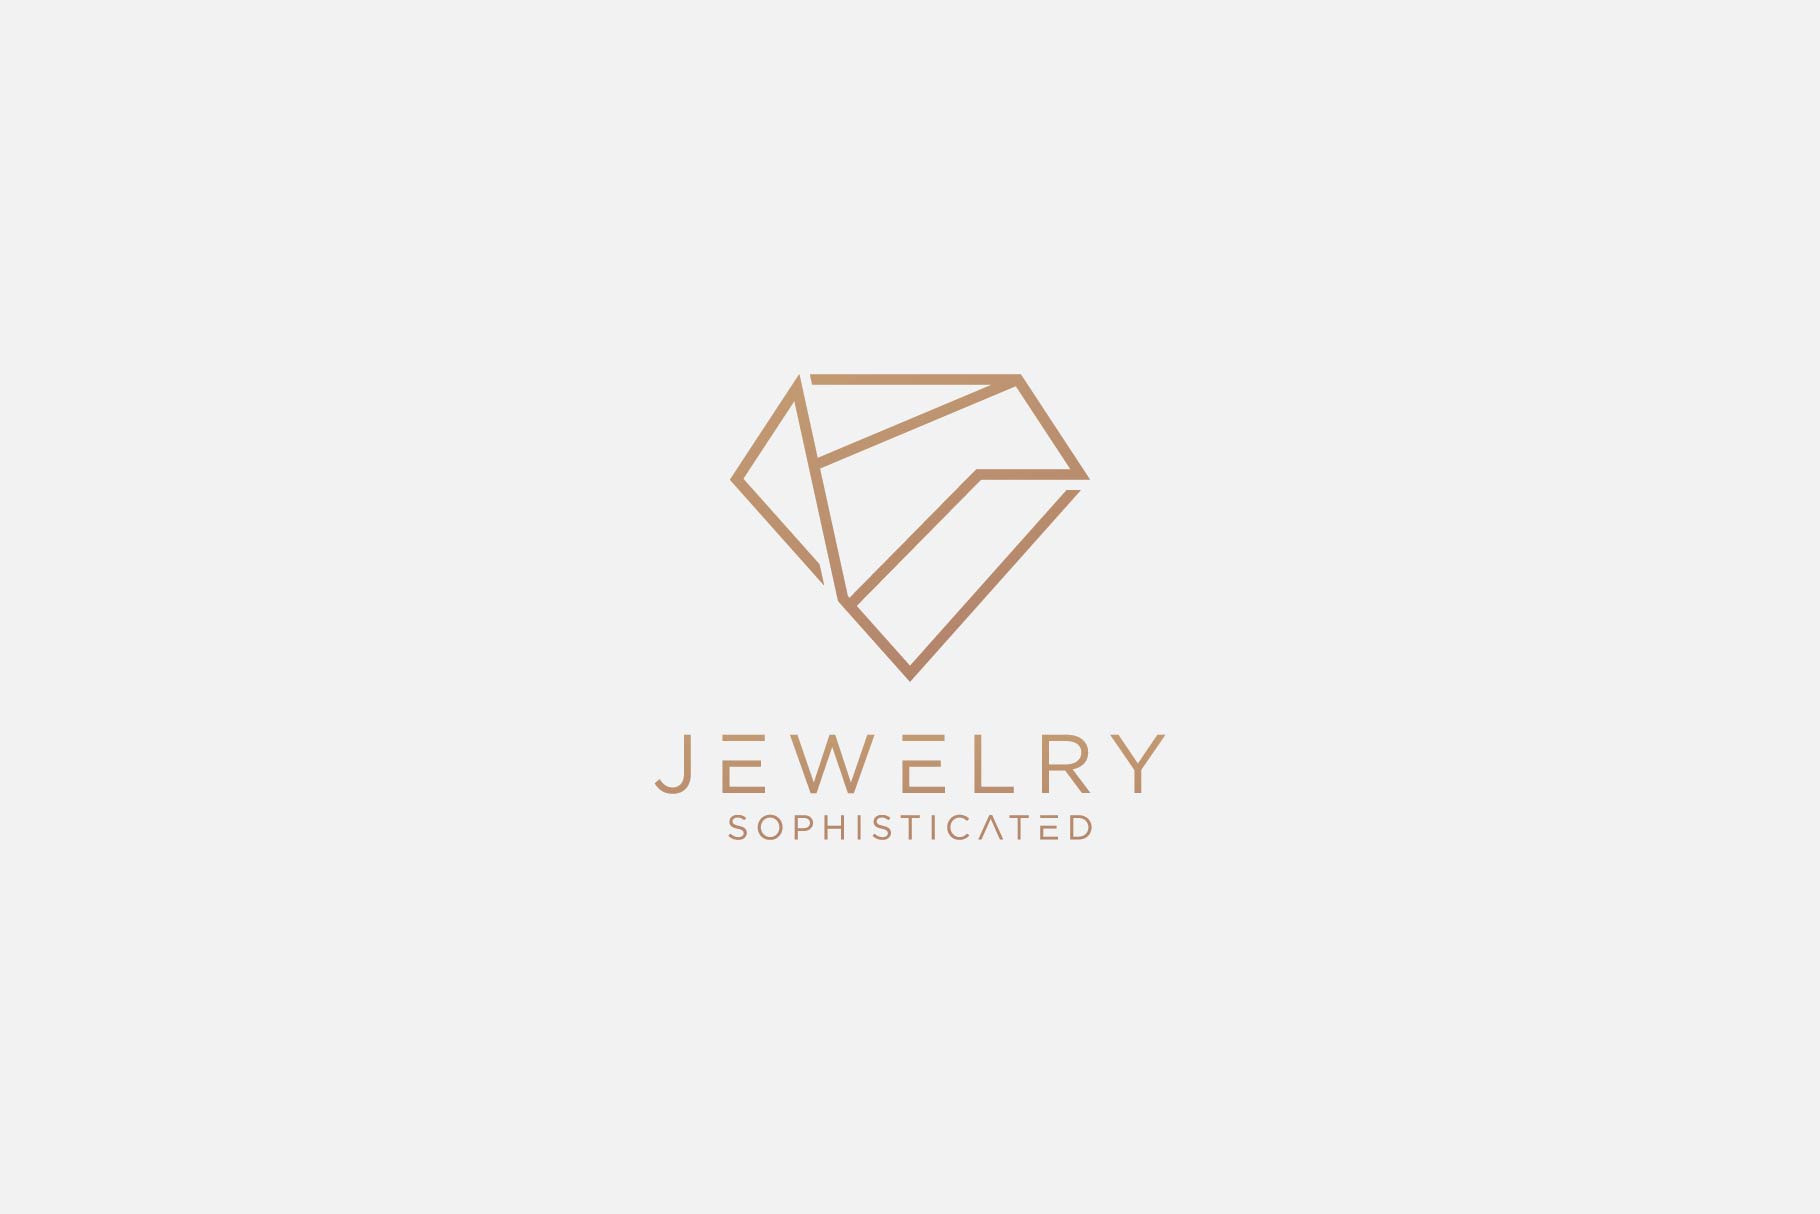 Sophisticated Jewelry Logo Creative Logo Templates Creative Market